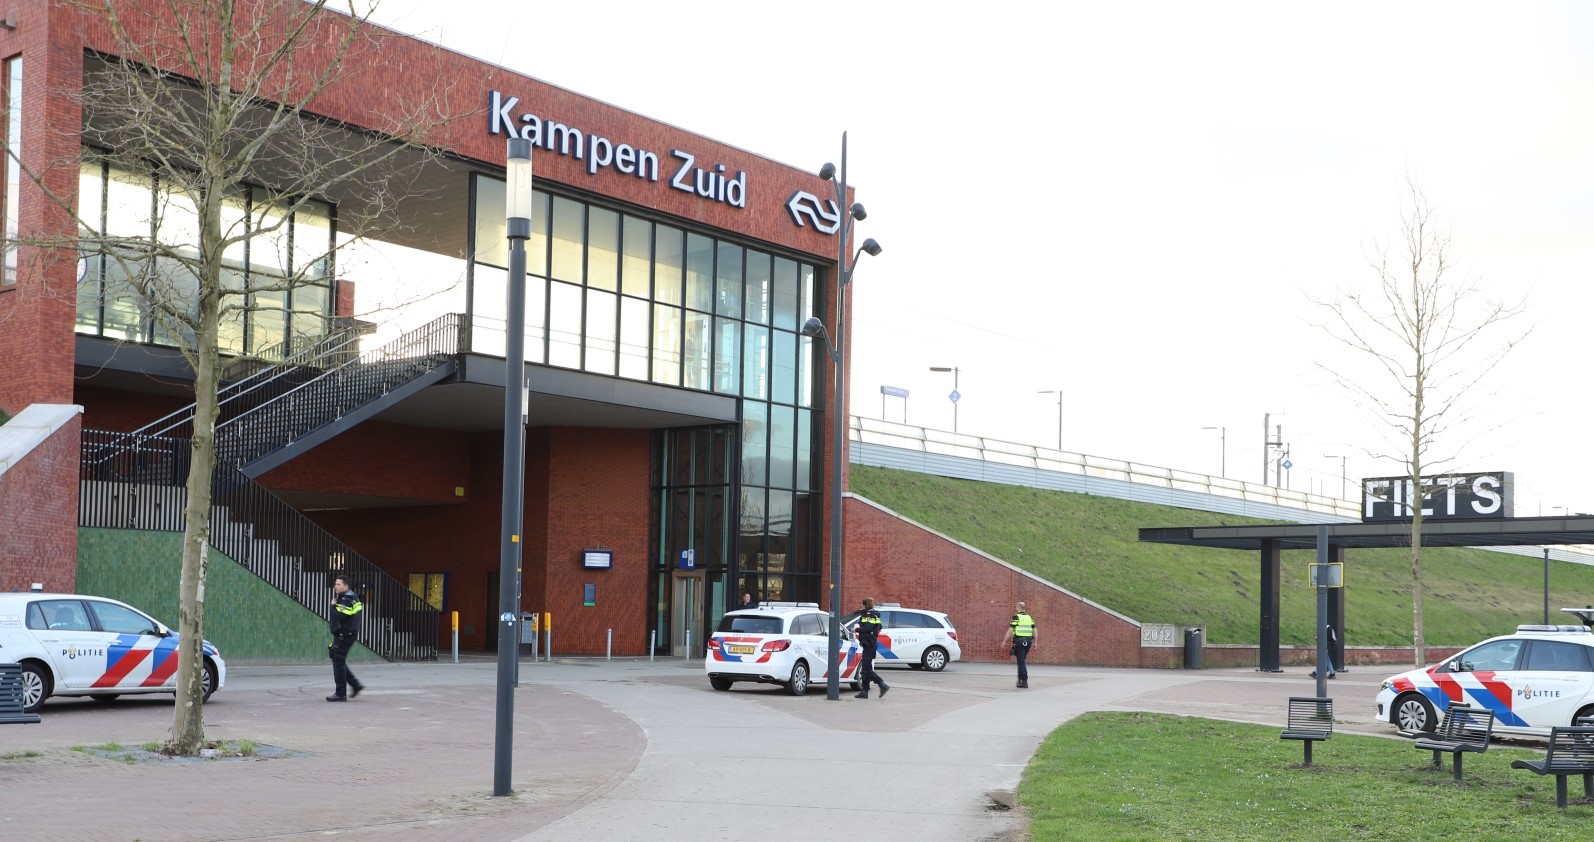 3 personen na woningoverval opgepakt bij Station Kampen-Zuid